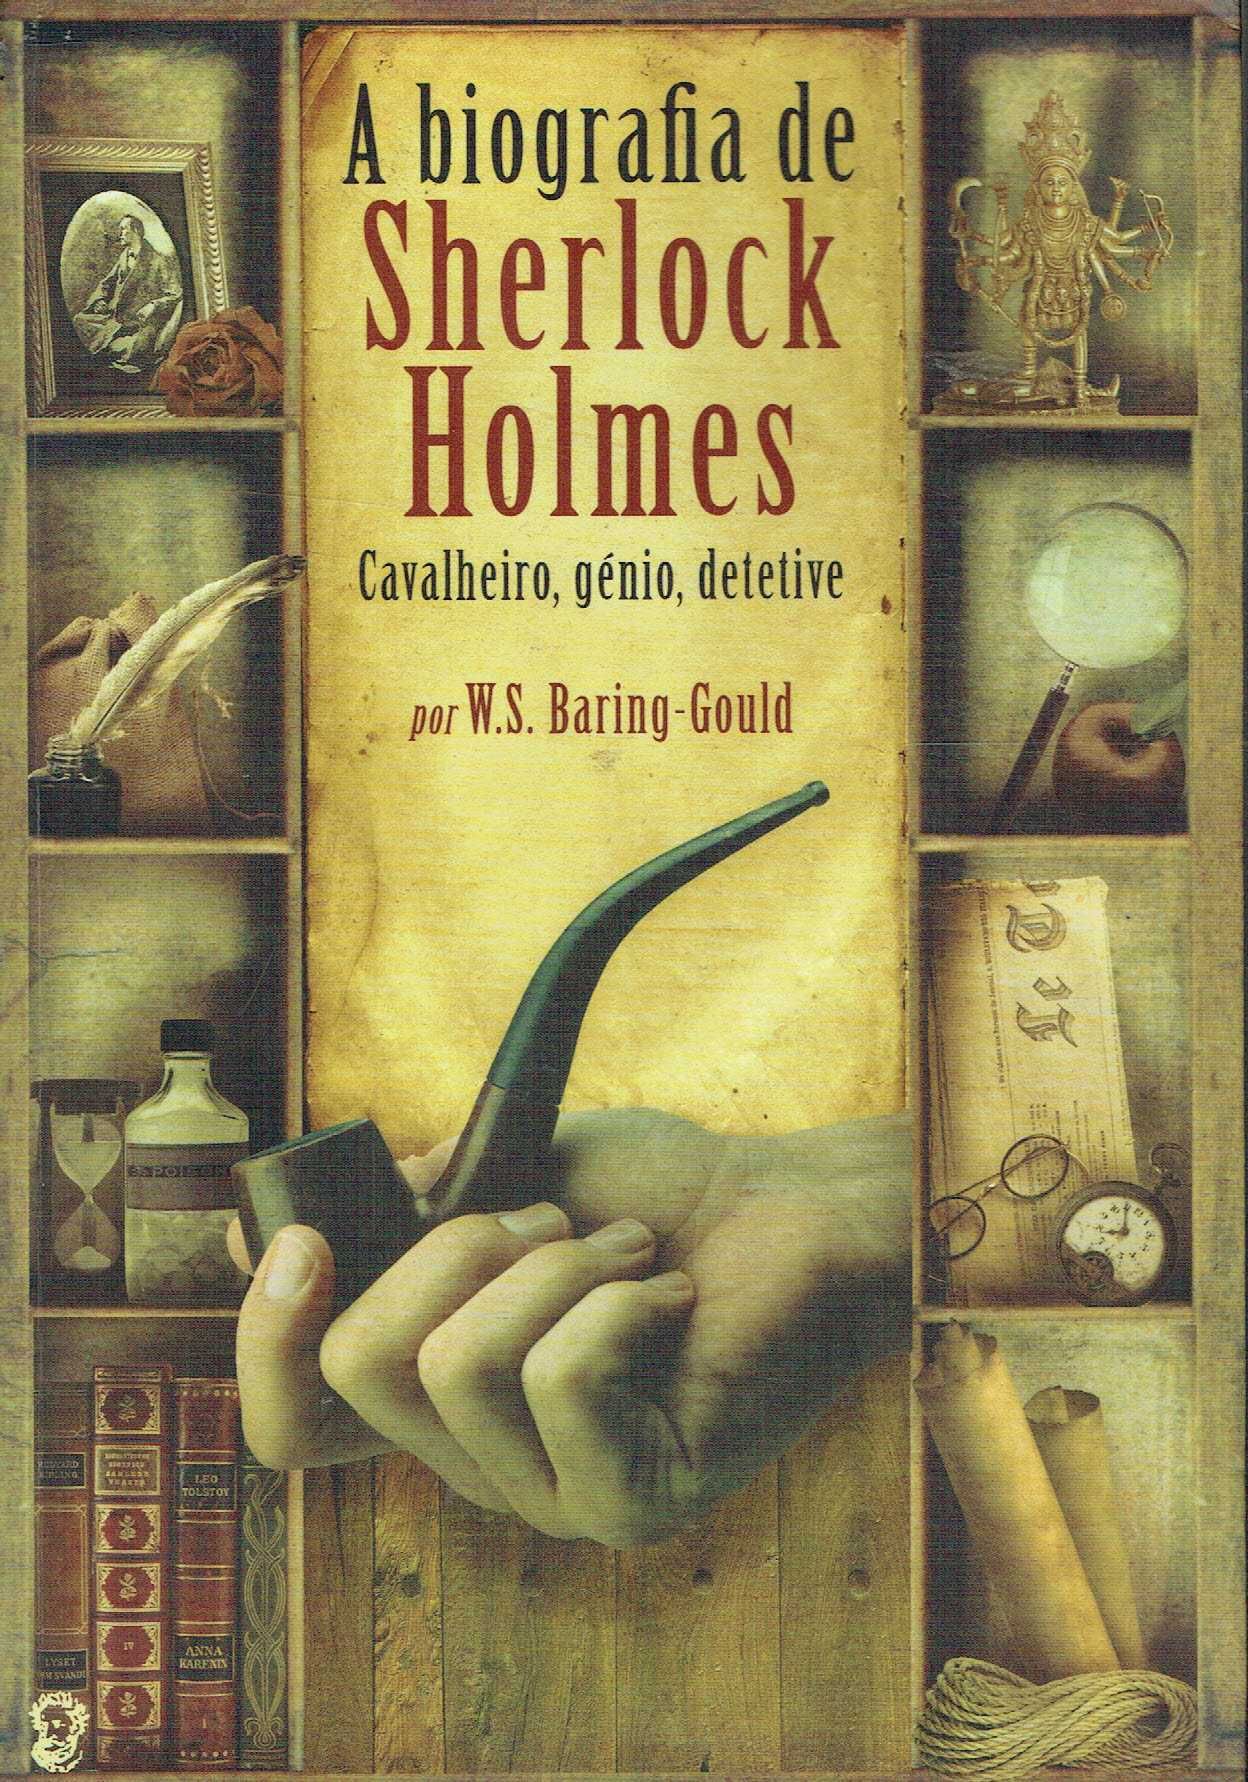 15208

A Biografia de Sherlock Holmes
de W.S. Baring-Gould